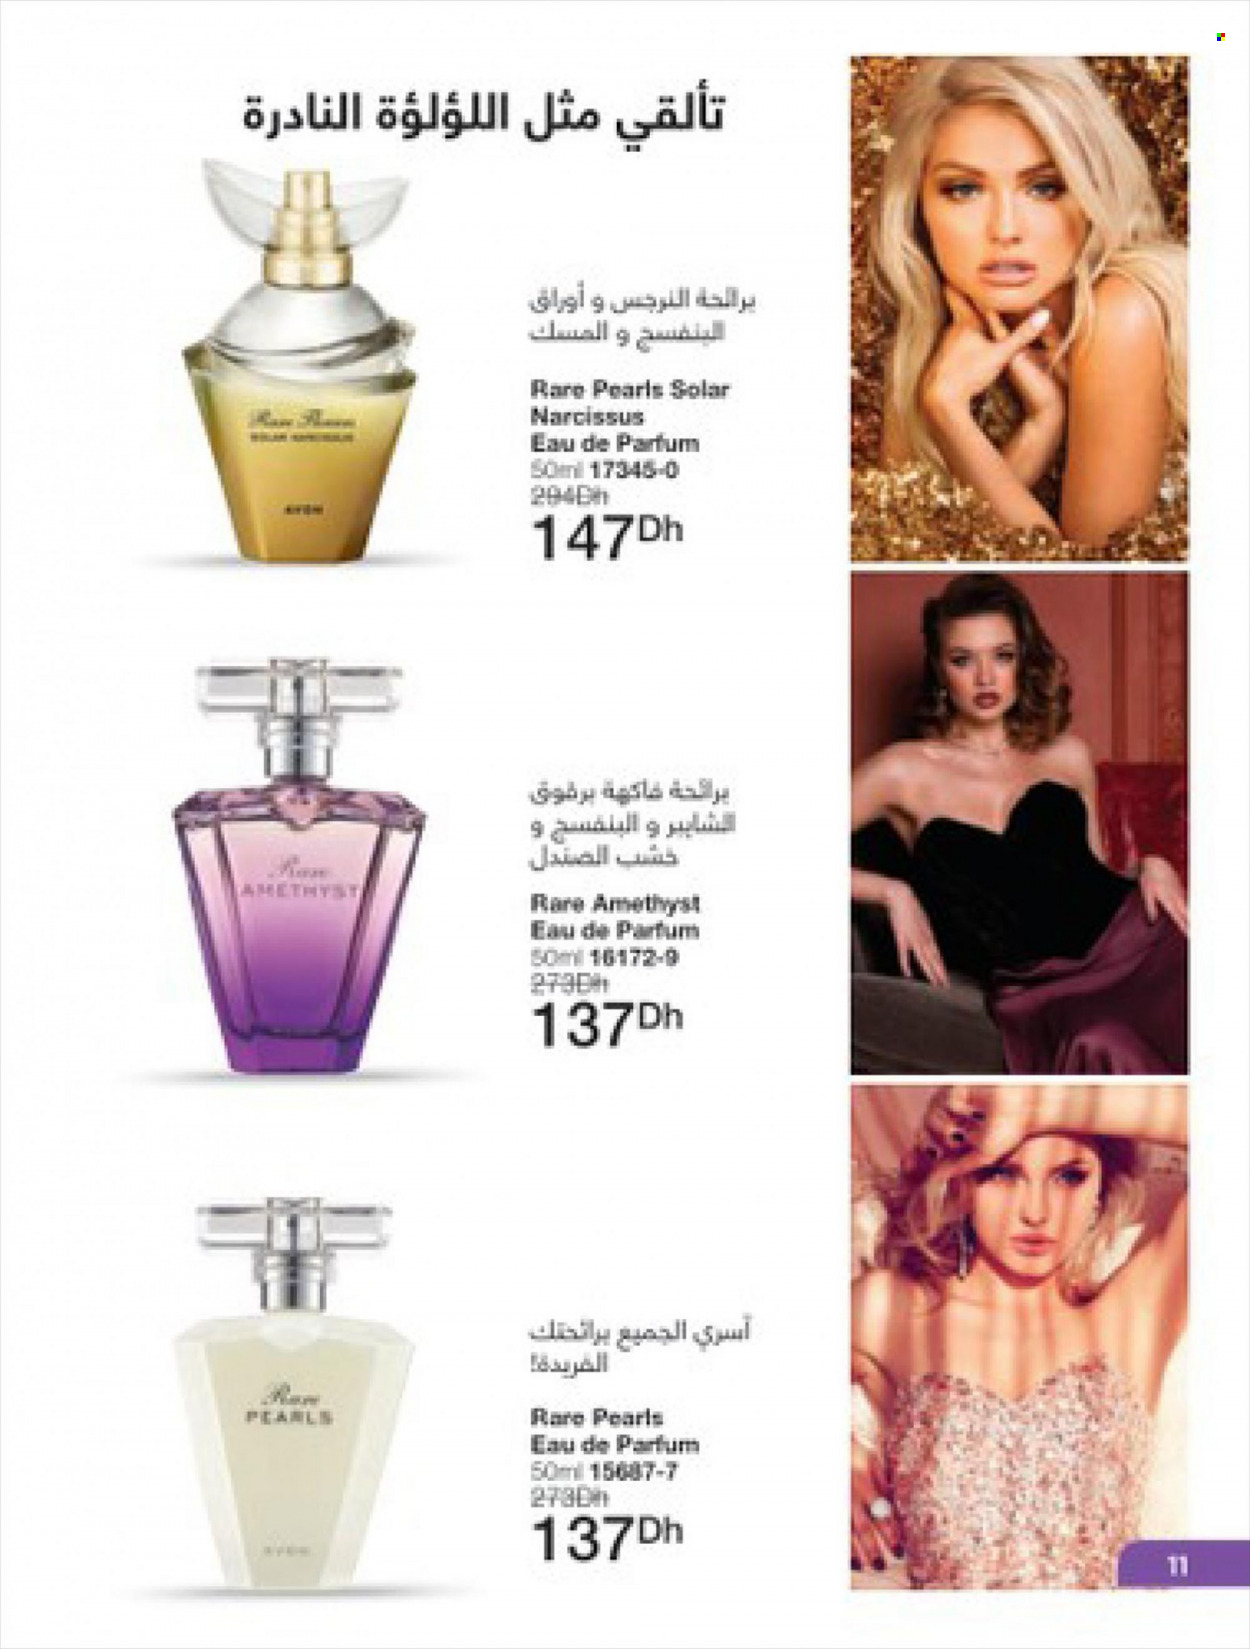 thumbnail - <magasin> - <du DD/MM/YYYY au DD/MM/YYYY> - Produits soldés - ,<products from flyers>. Page 13.